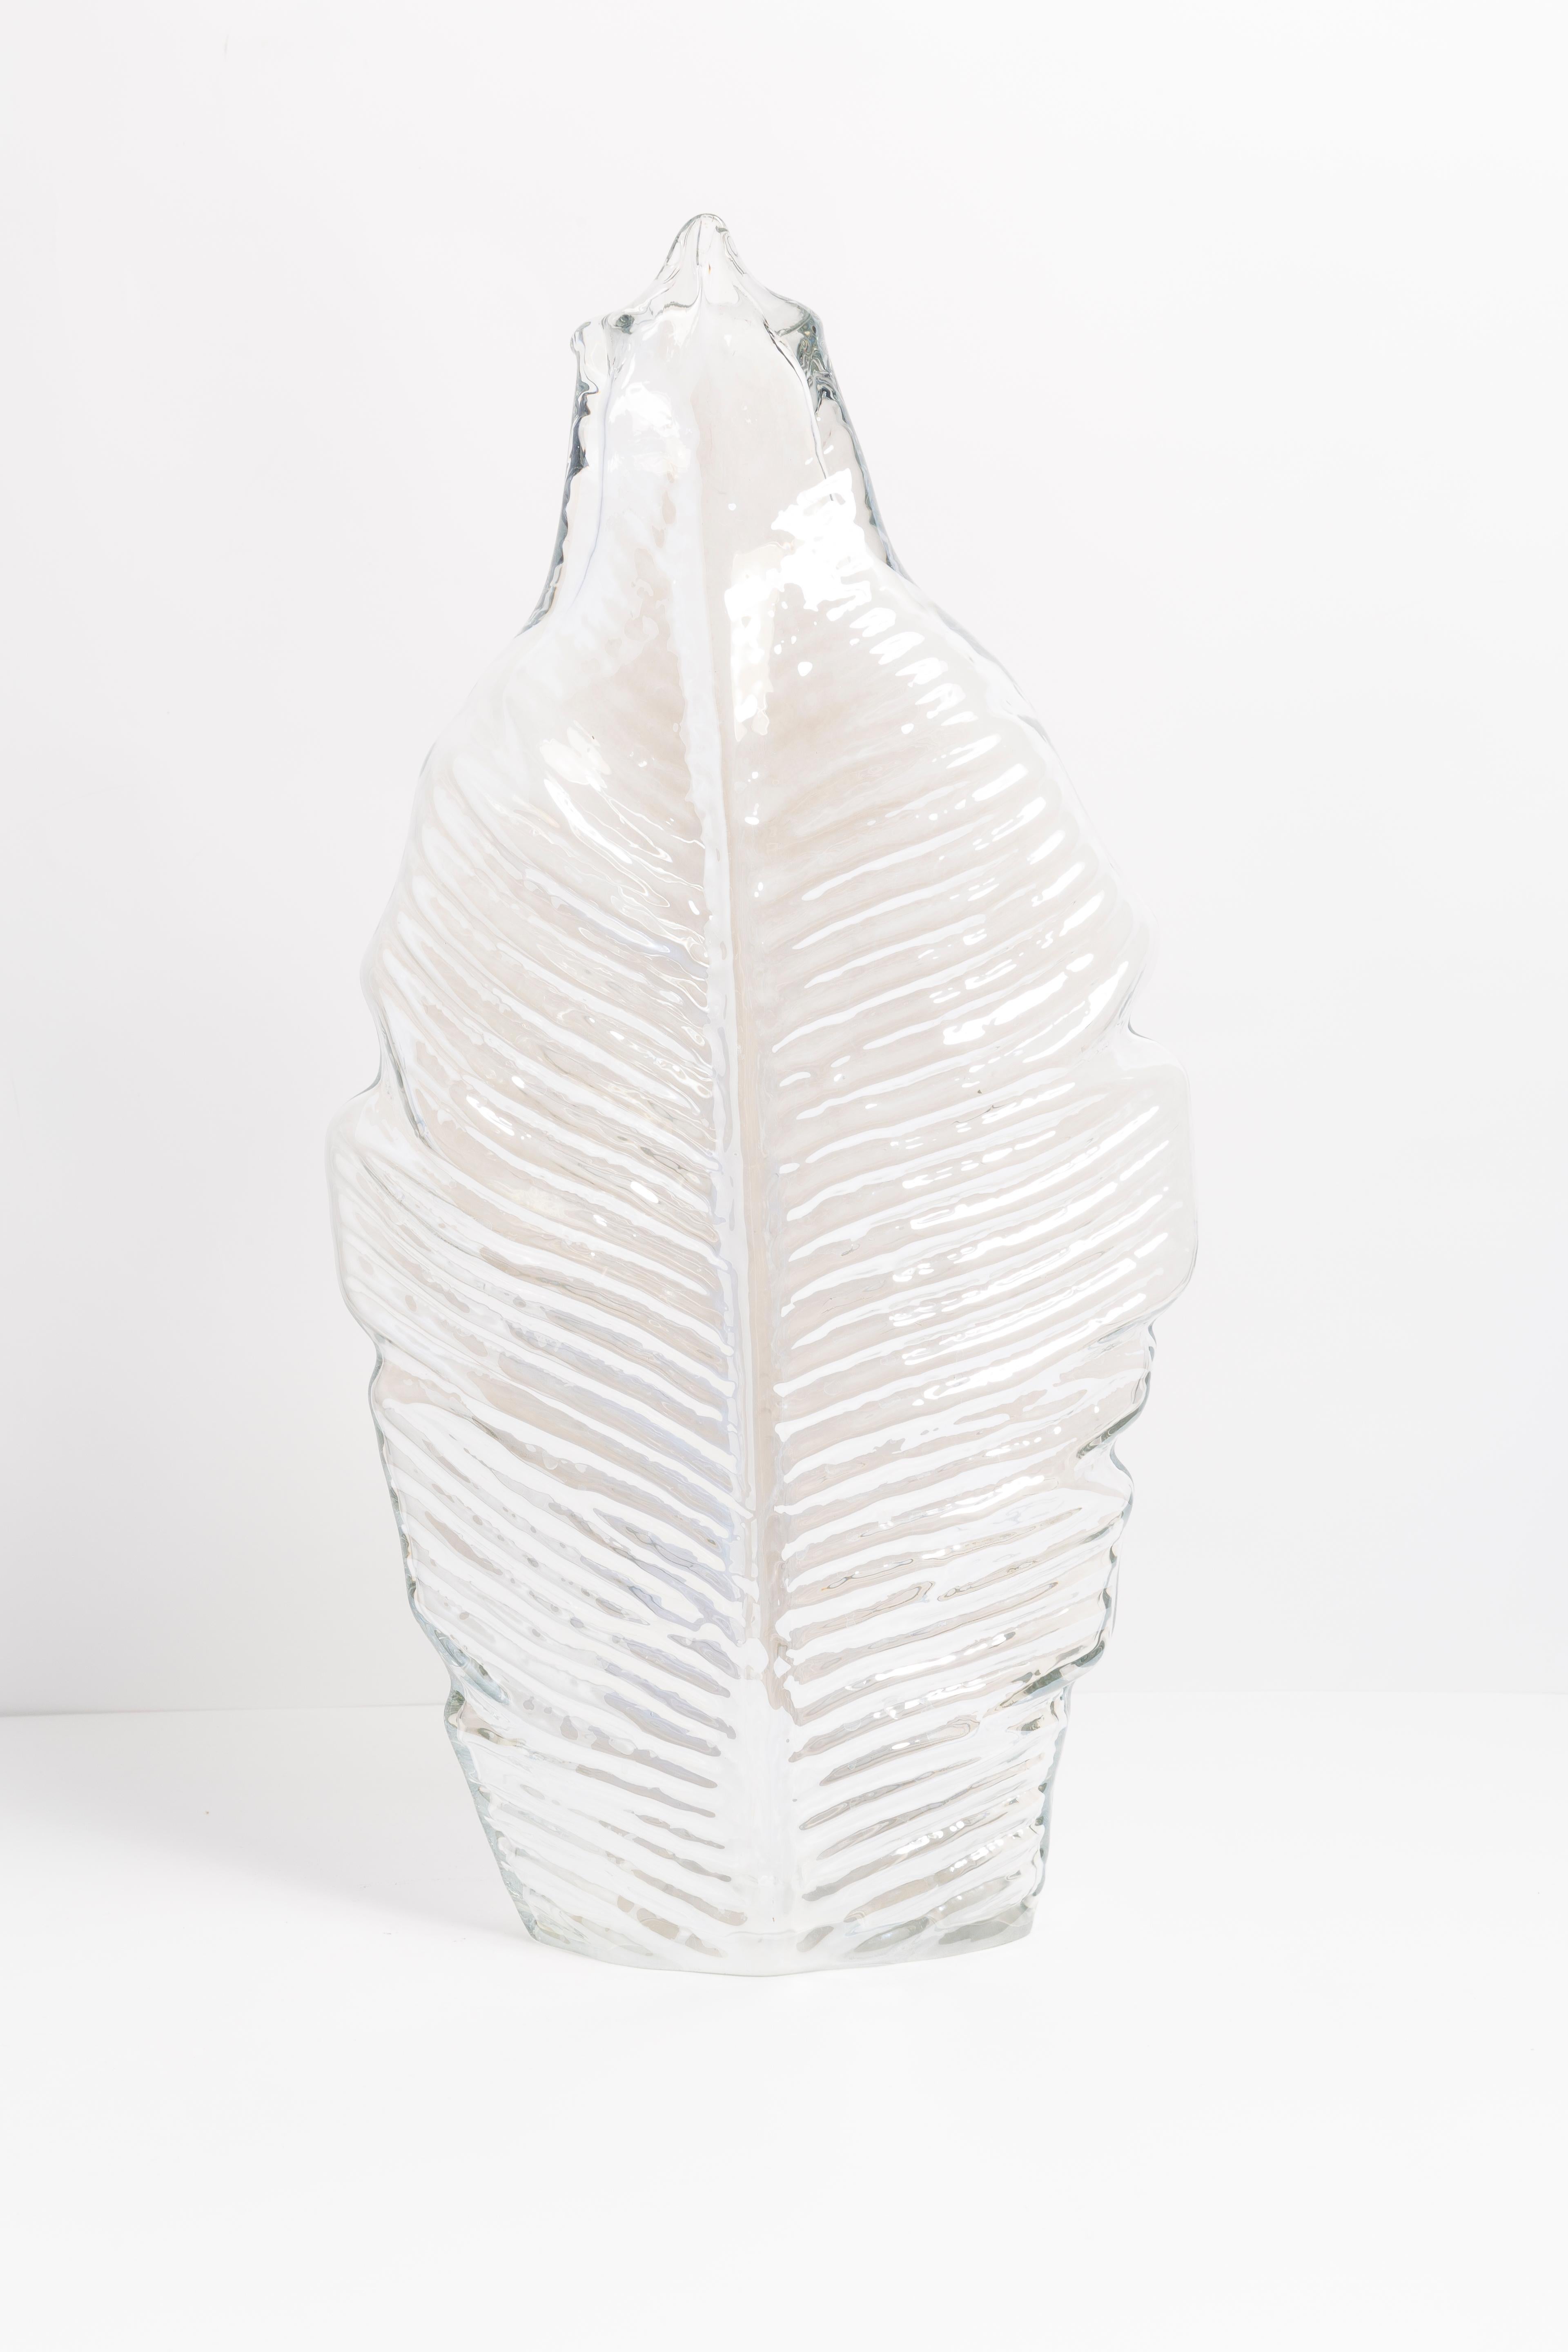 Glass Mid Century Big Leaf Transparent Vase, Italy, 1960s For Sale